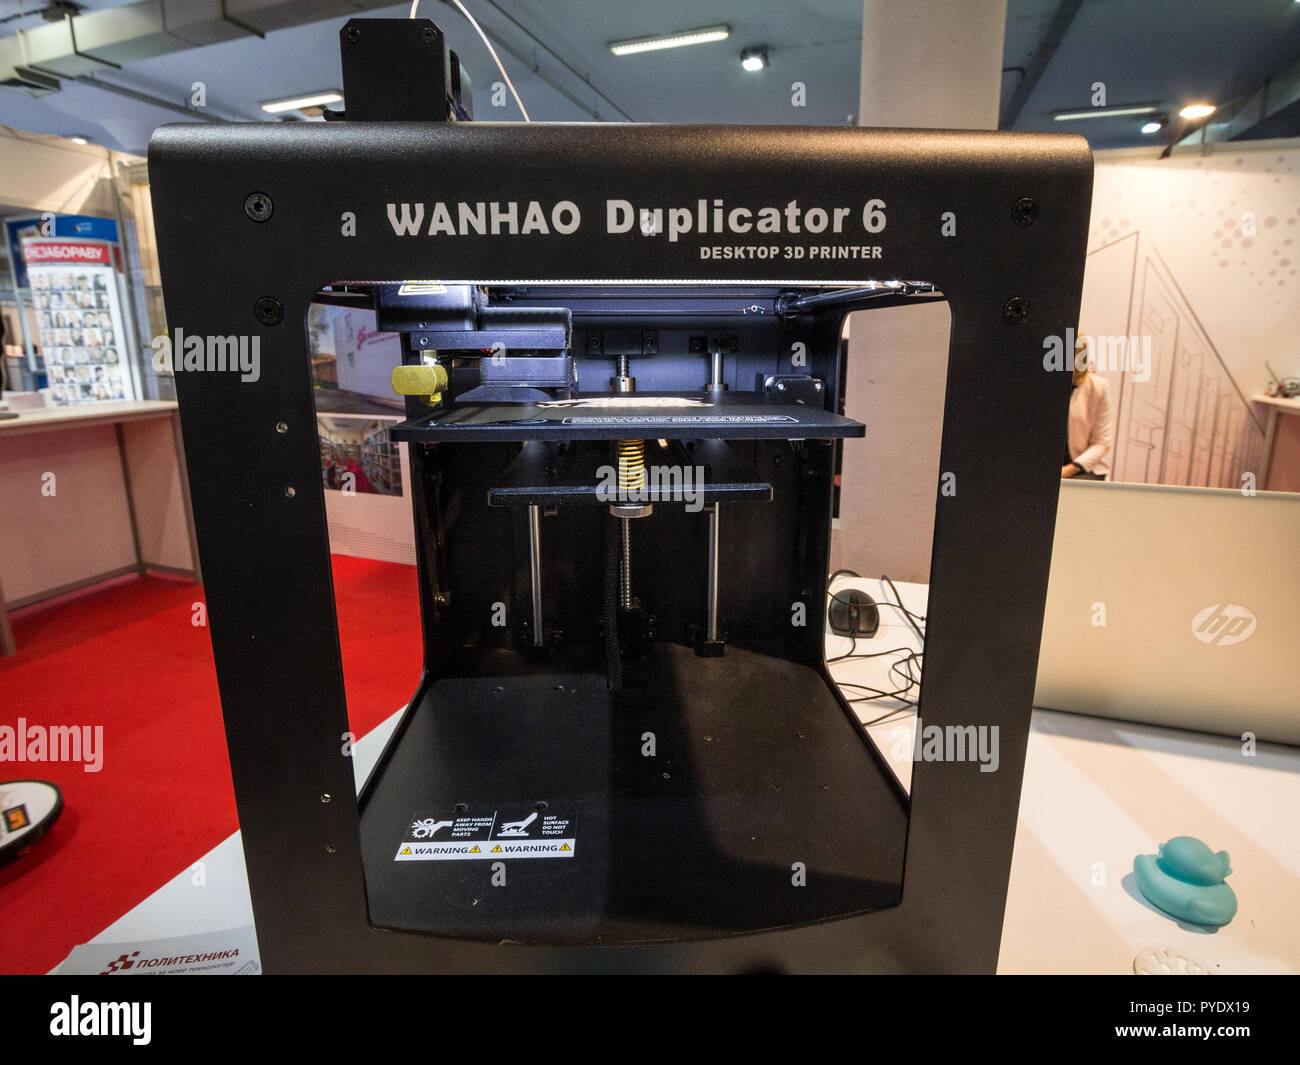 BELGRADE, SERBIA - OCTOBER 25, 2018: Wanhao logo on a 3D printer